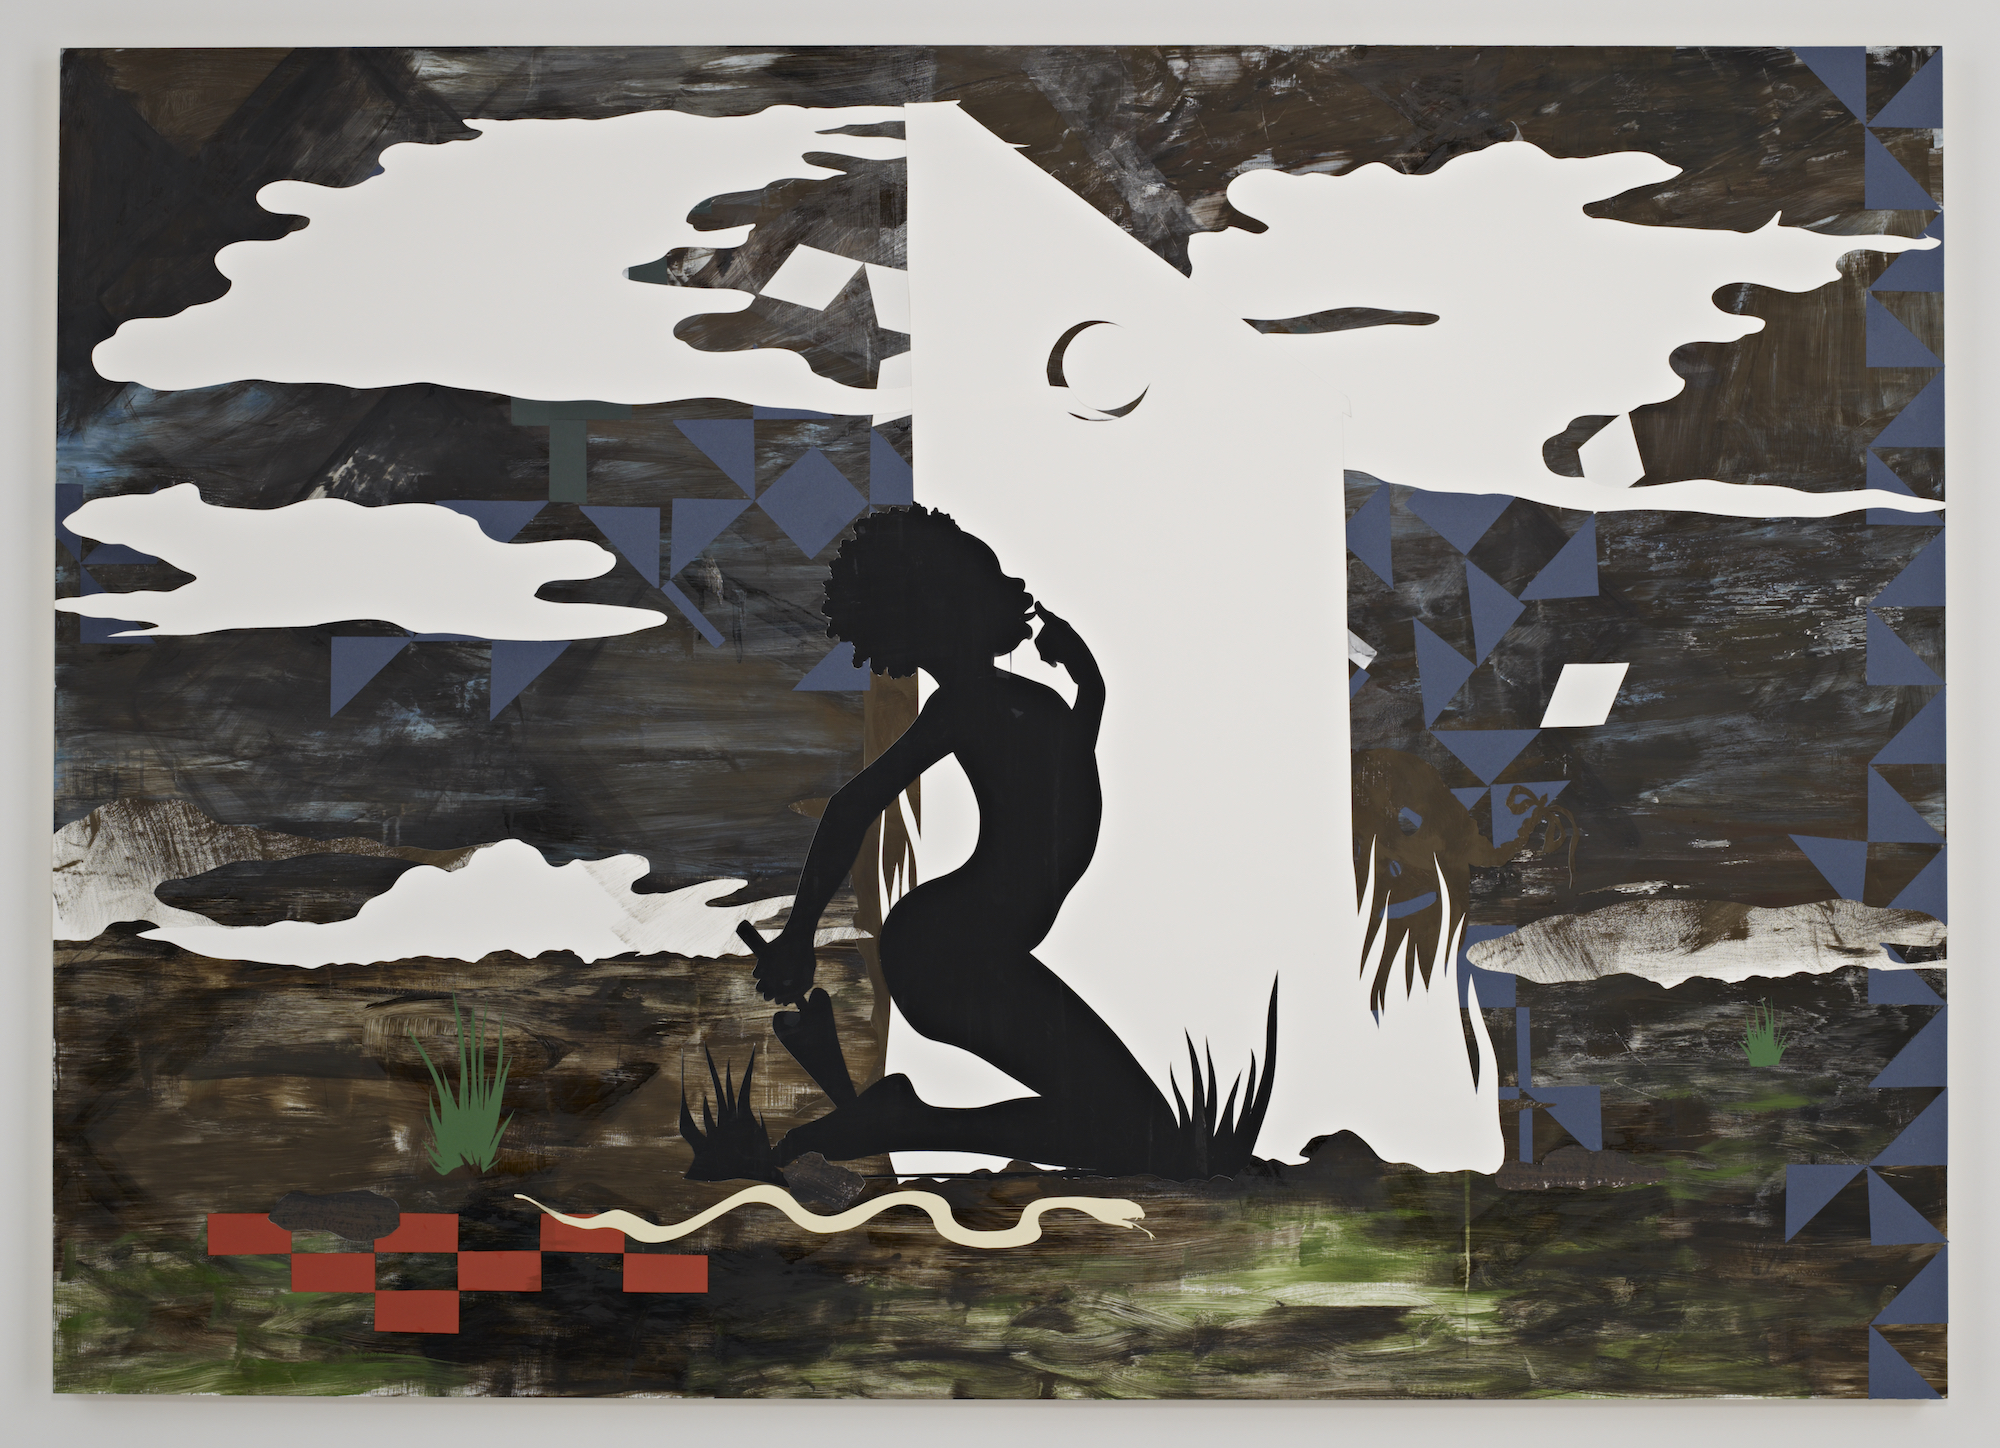  Kara Walker,&nbsp; Mississippi Mud , 2007. Mixed media, cut paper, casein on gessoed panel, 60 x 84 x 2 inches. 